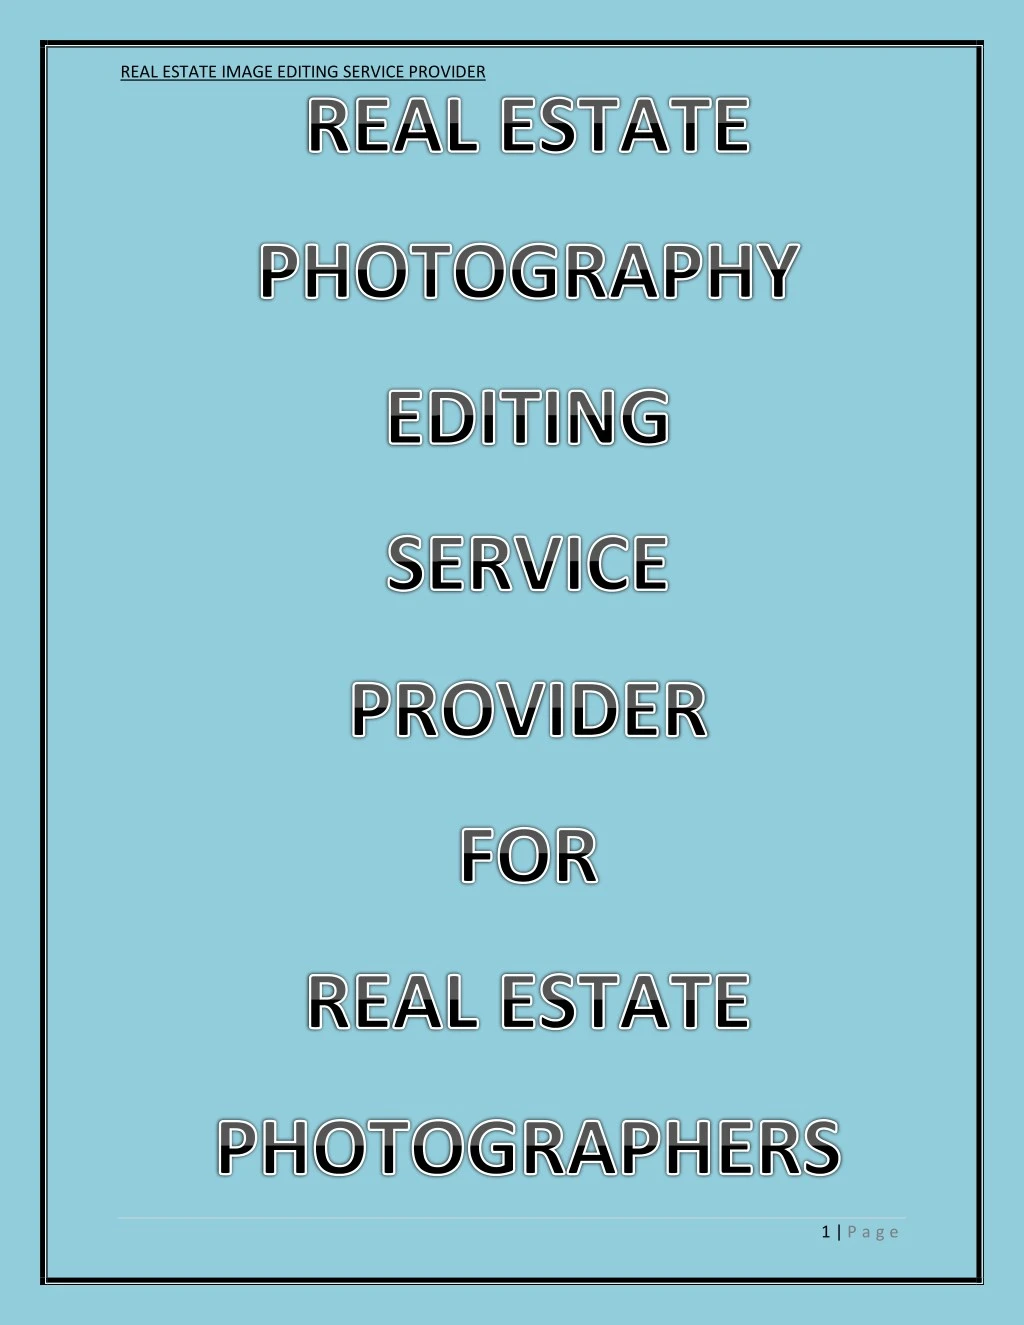 real estate image editing service provider